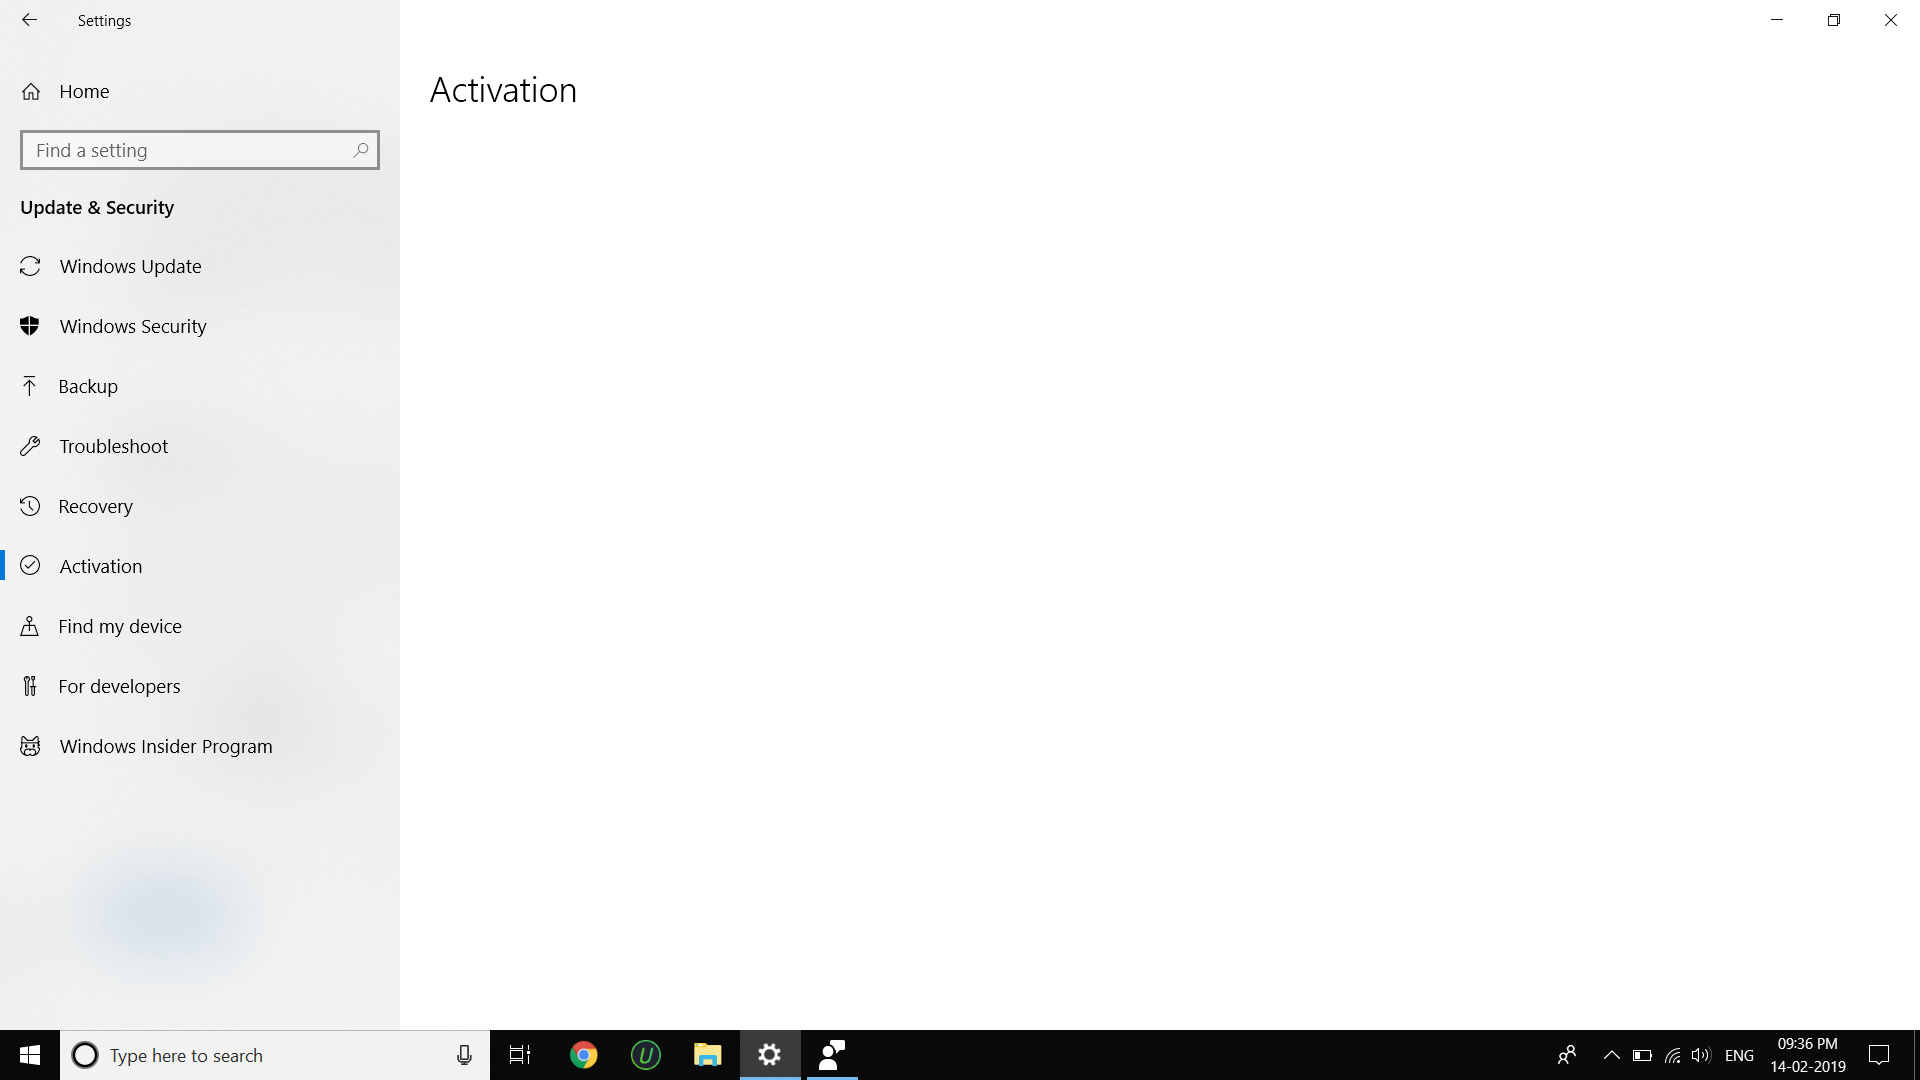 windows activation fails after update 08f3019e-b57e-4d2e-95ba-c44b02699cb1?upload=true.png